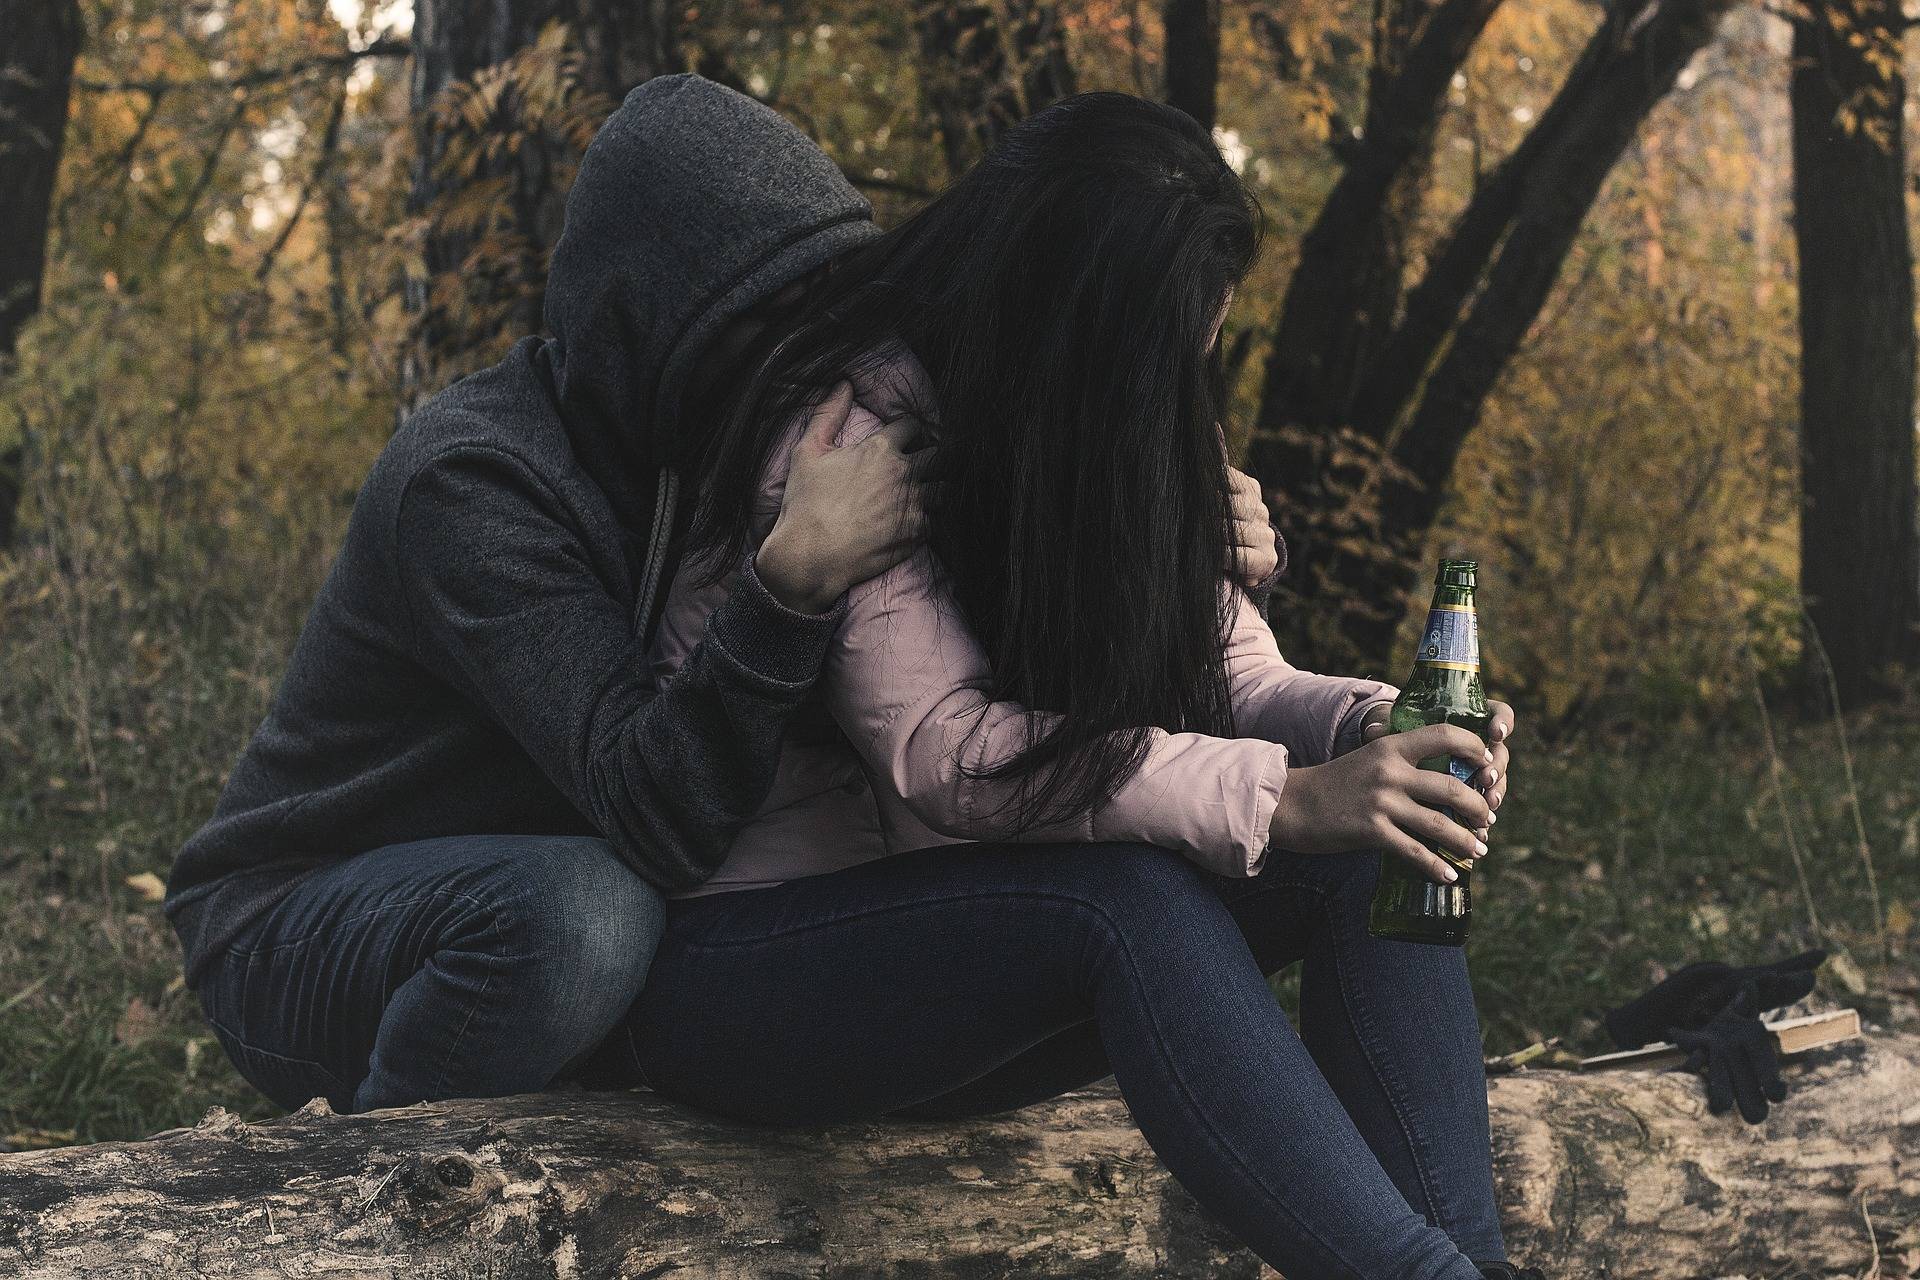 Addressing alcohol addiction amid a global pandemic